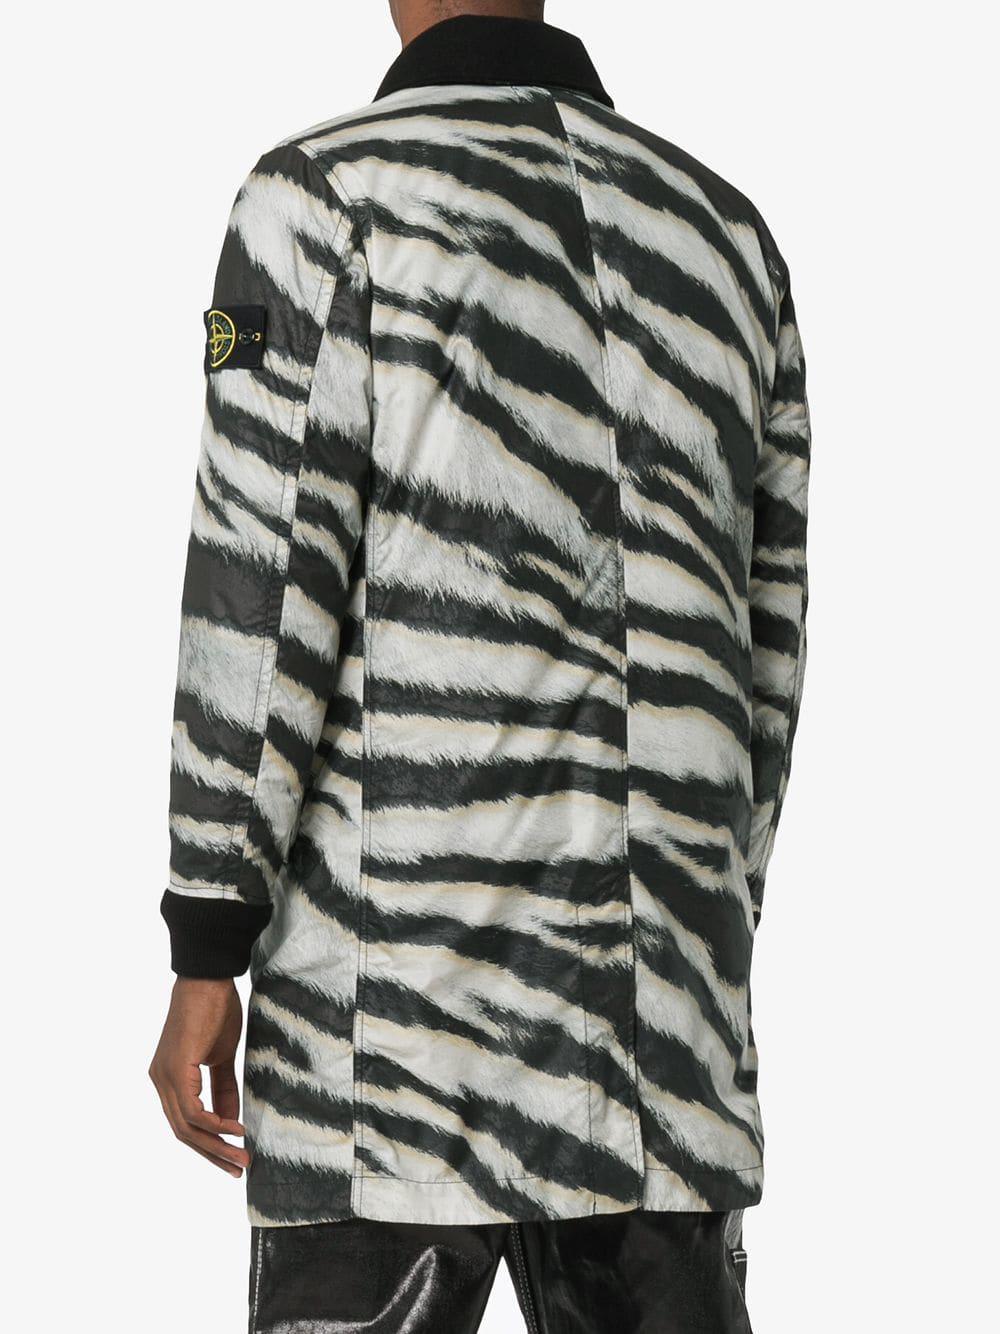 Stone Island Logo Detail Zebra Print Reversible Wool Blend Jacket in Black  for Men | Lyst Canada